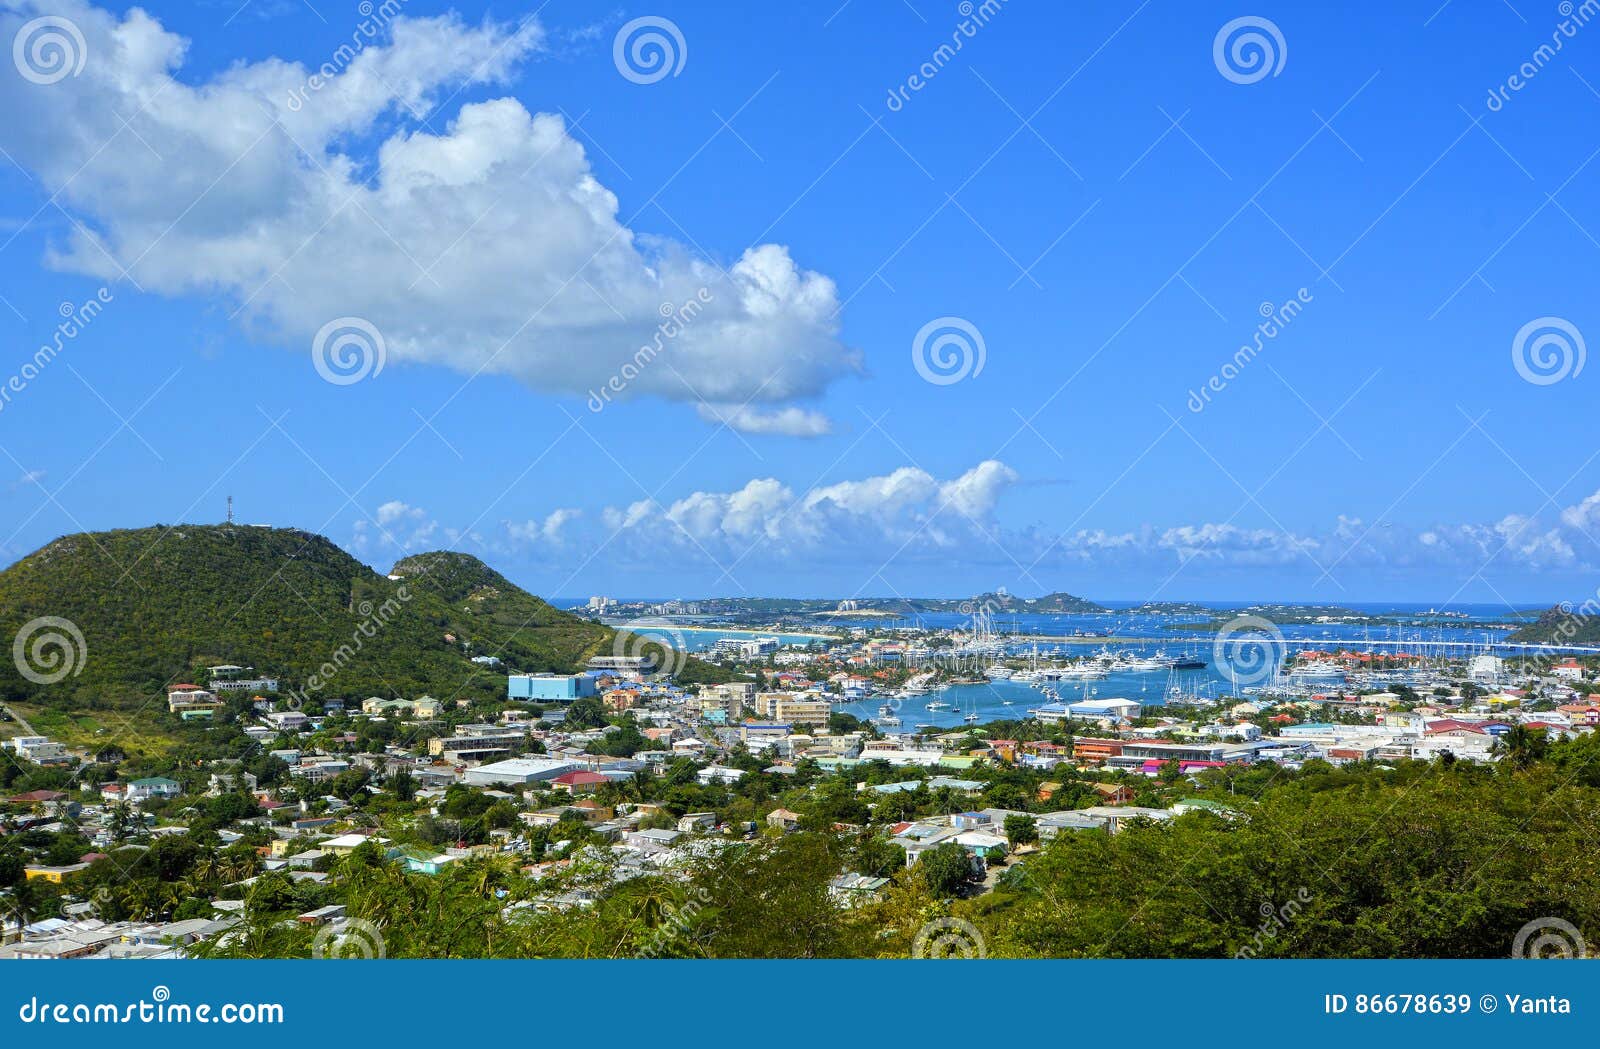 Panoramic View of St Martin, Beautiful Caribbean Island Stock Image ...